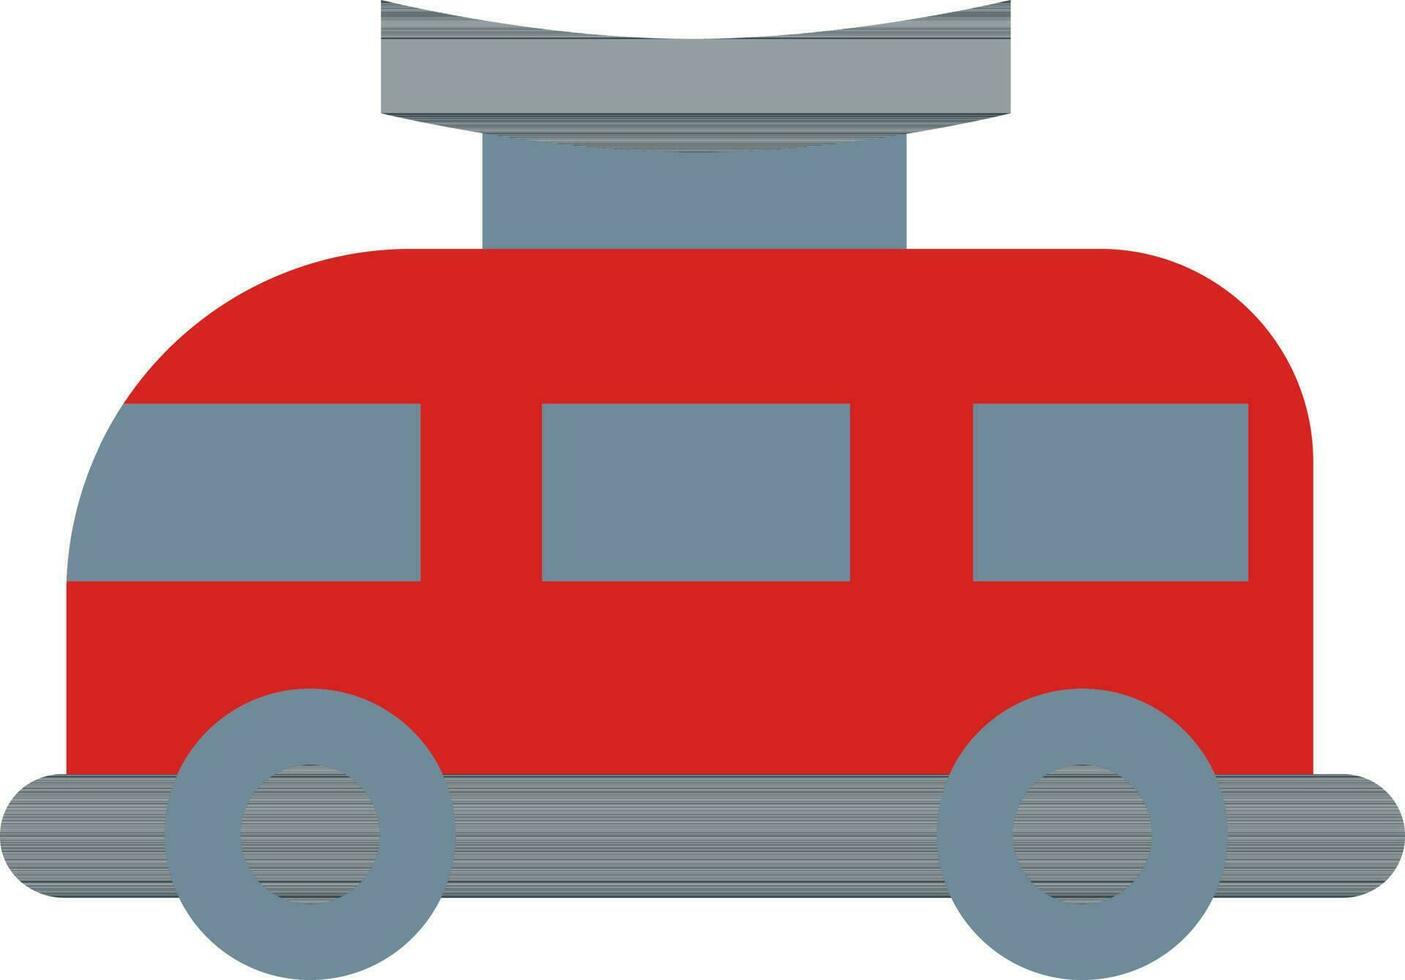 Wohnmobil van Symbol im grau und rot Farbe. vektor